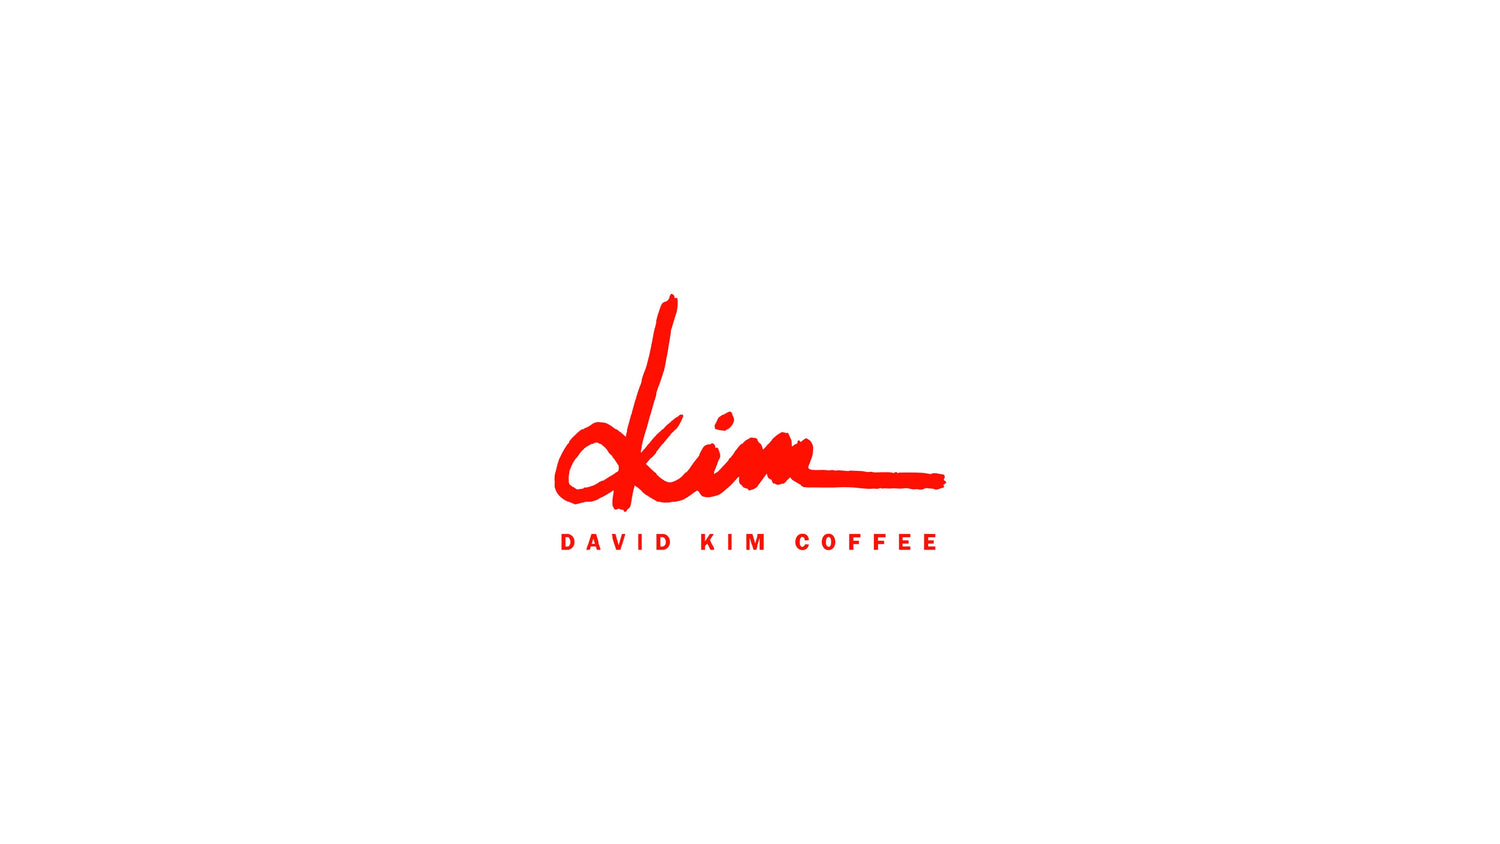 David Kim Coffee